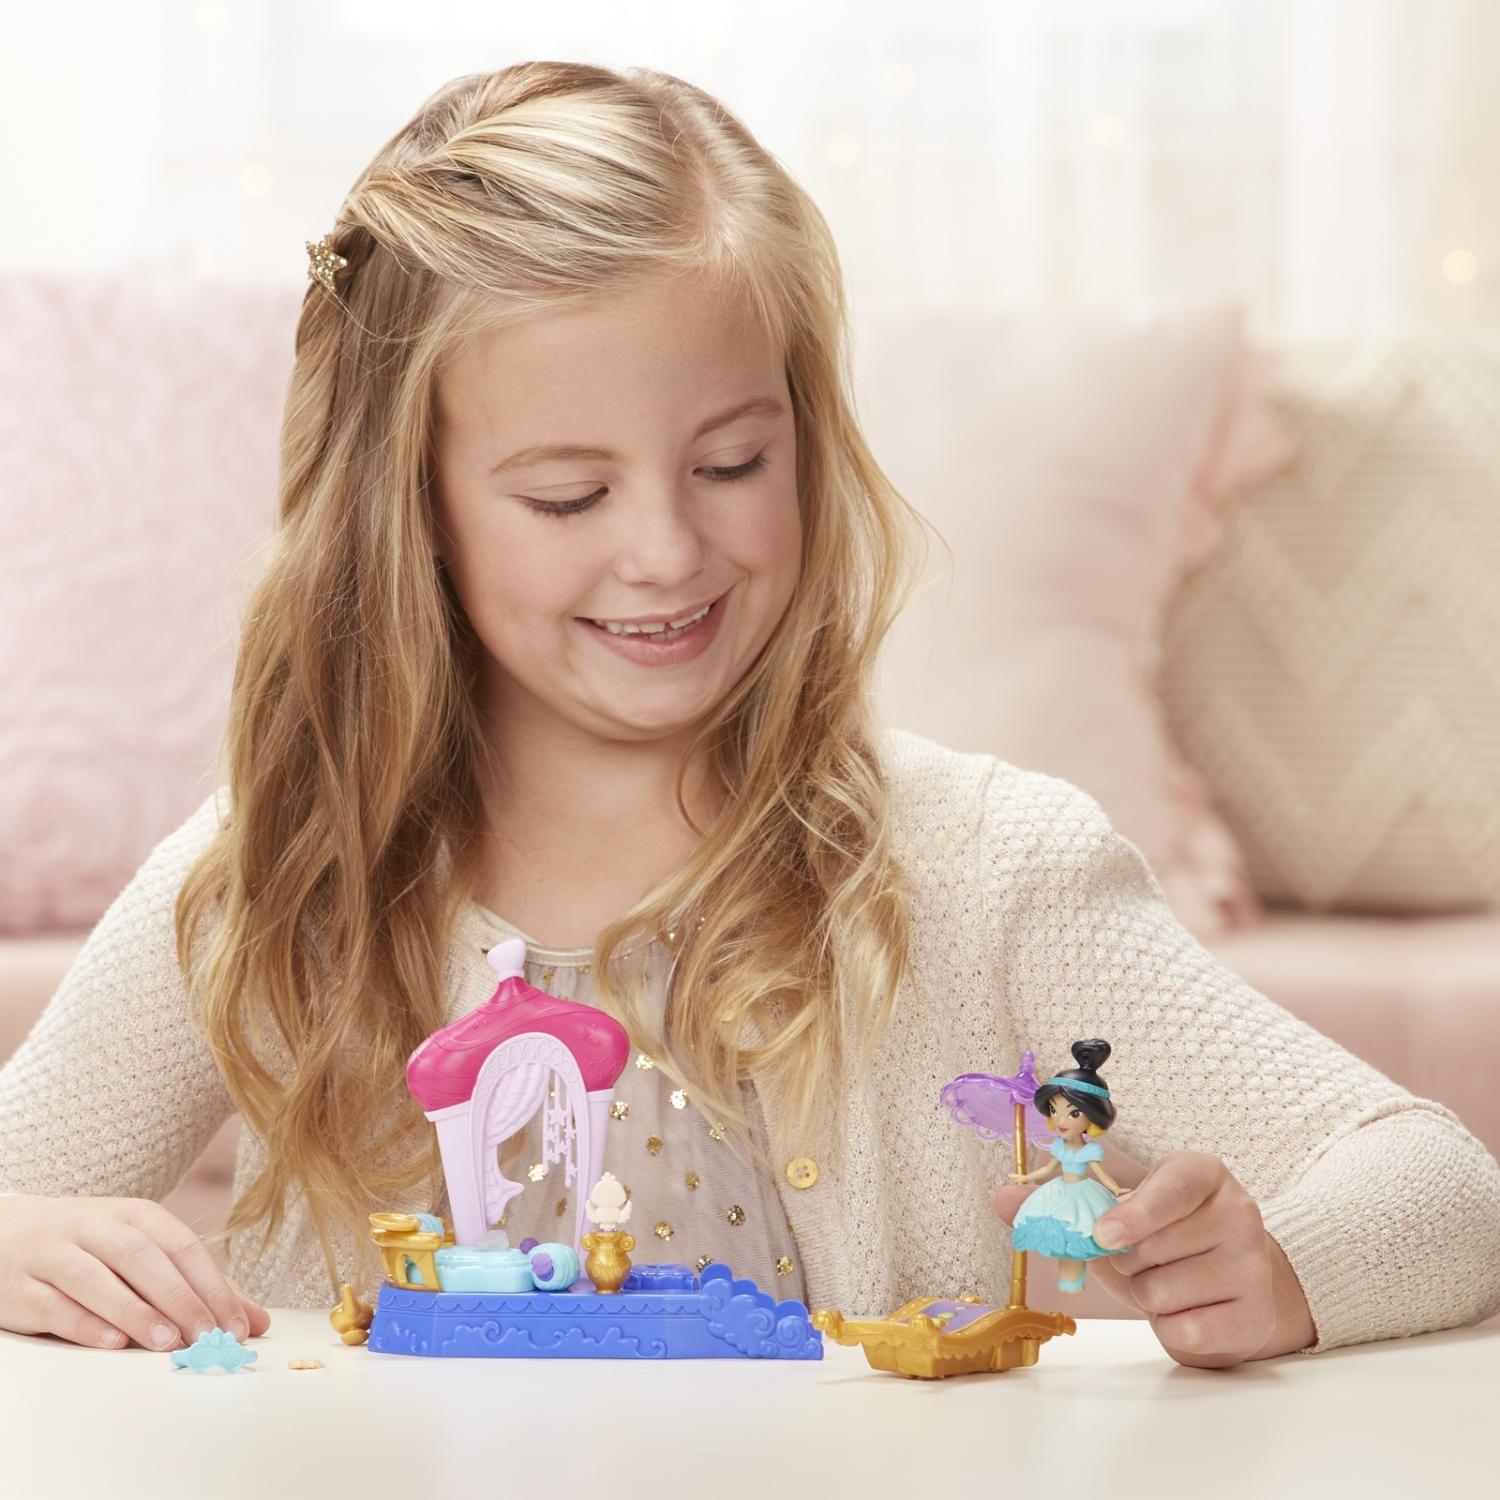 Игровой набор Disney Princess - Фигурка и транспорт, Жасмин, Золушка   